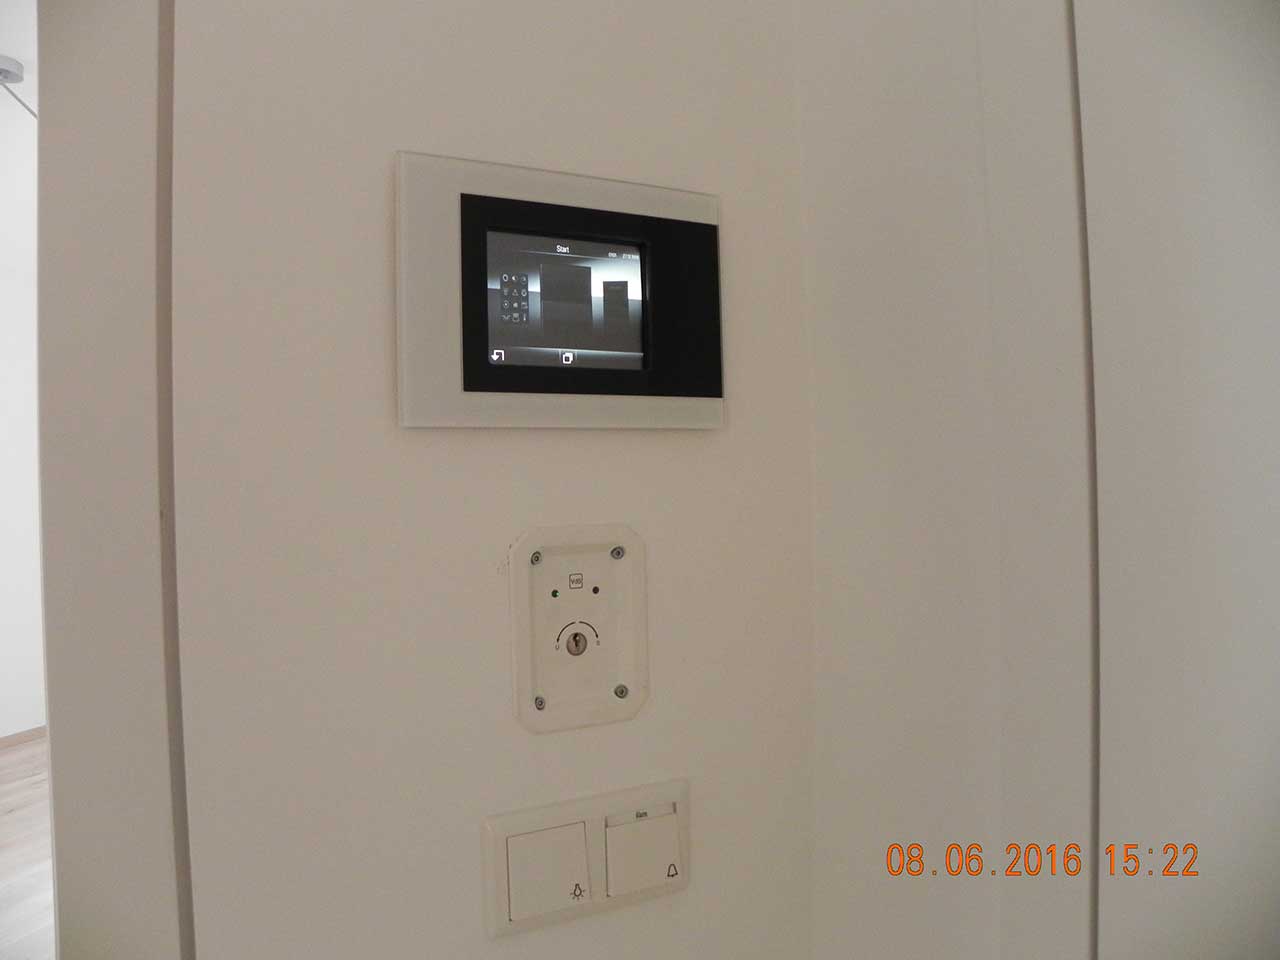 Elektrik inkl. Smart Home System